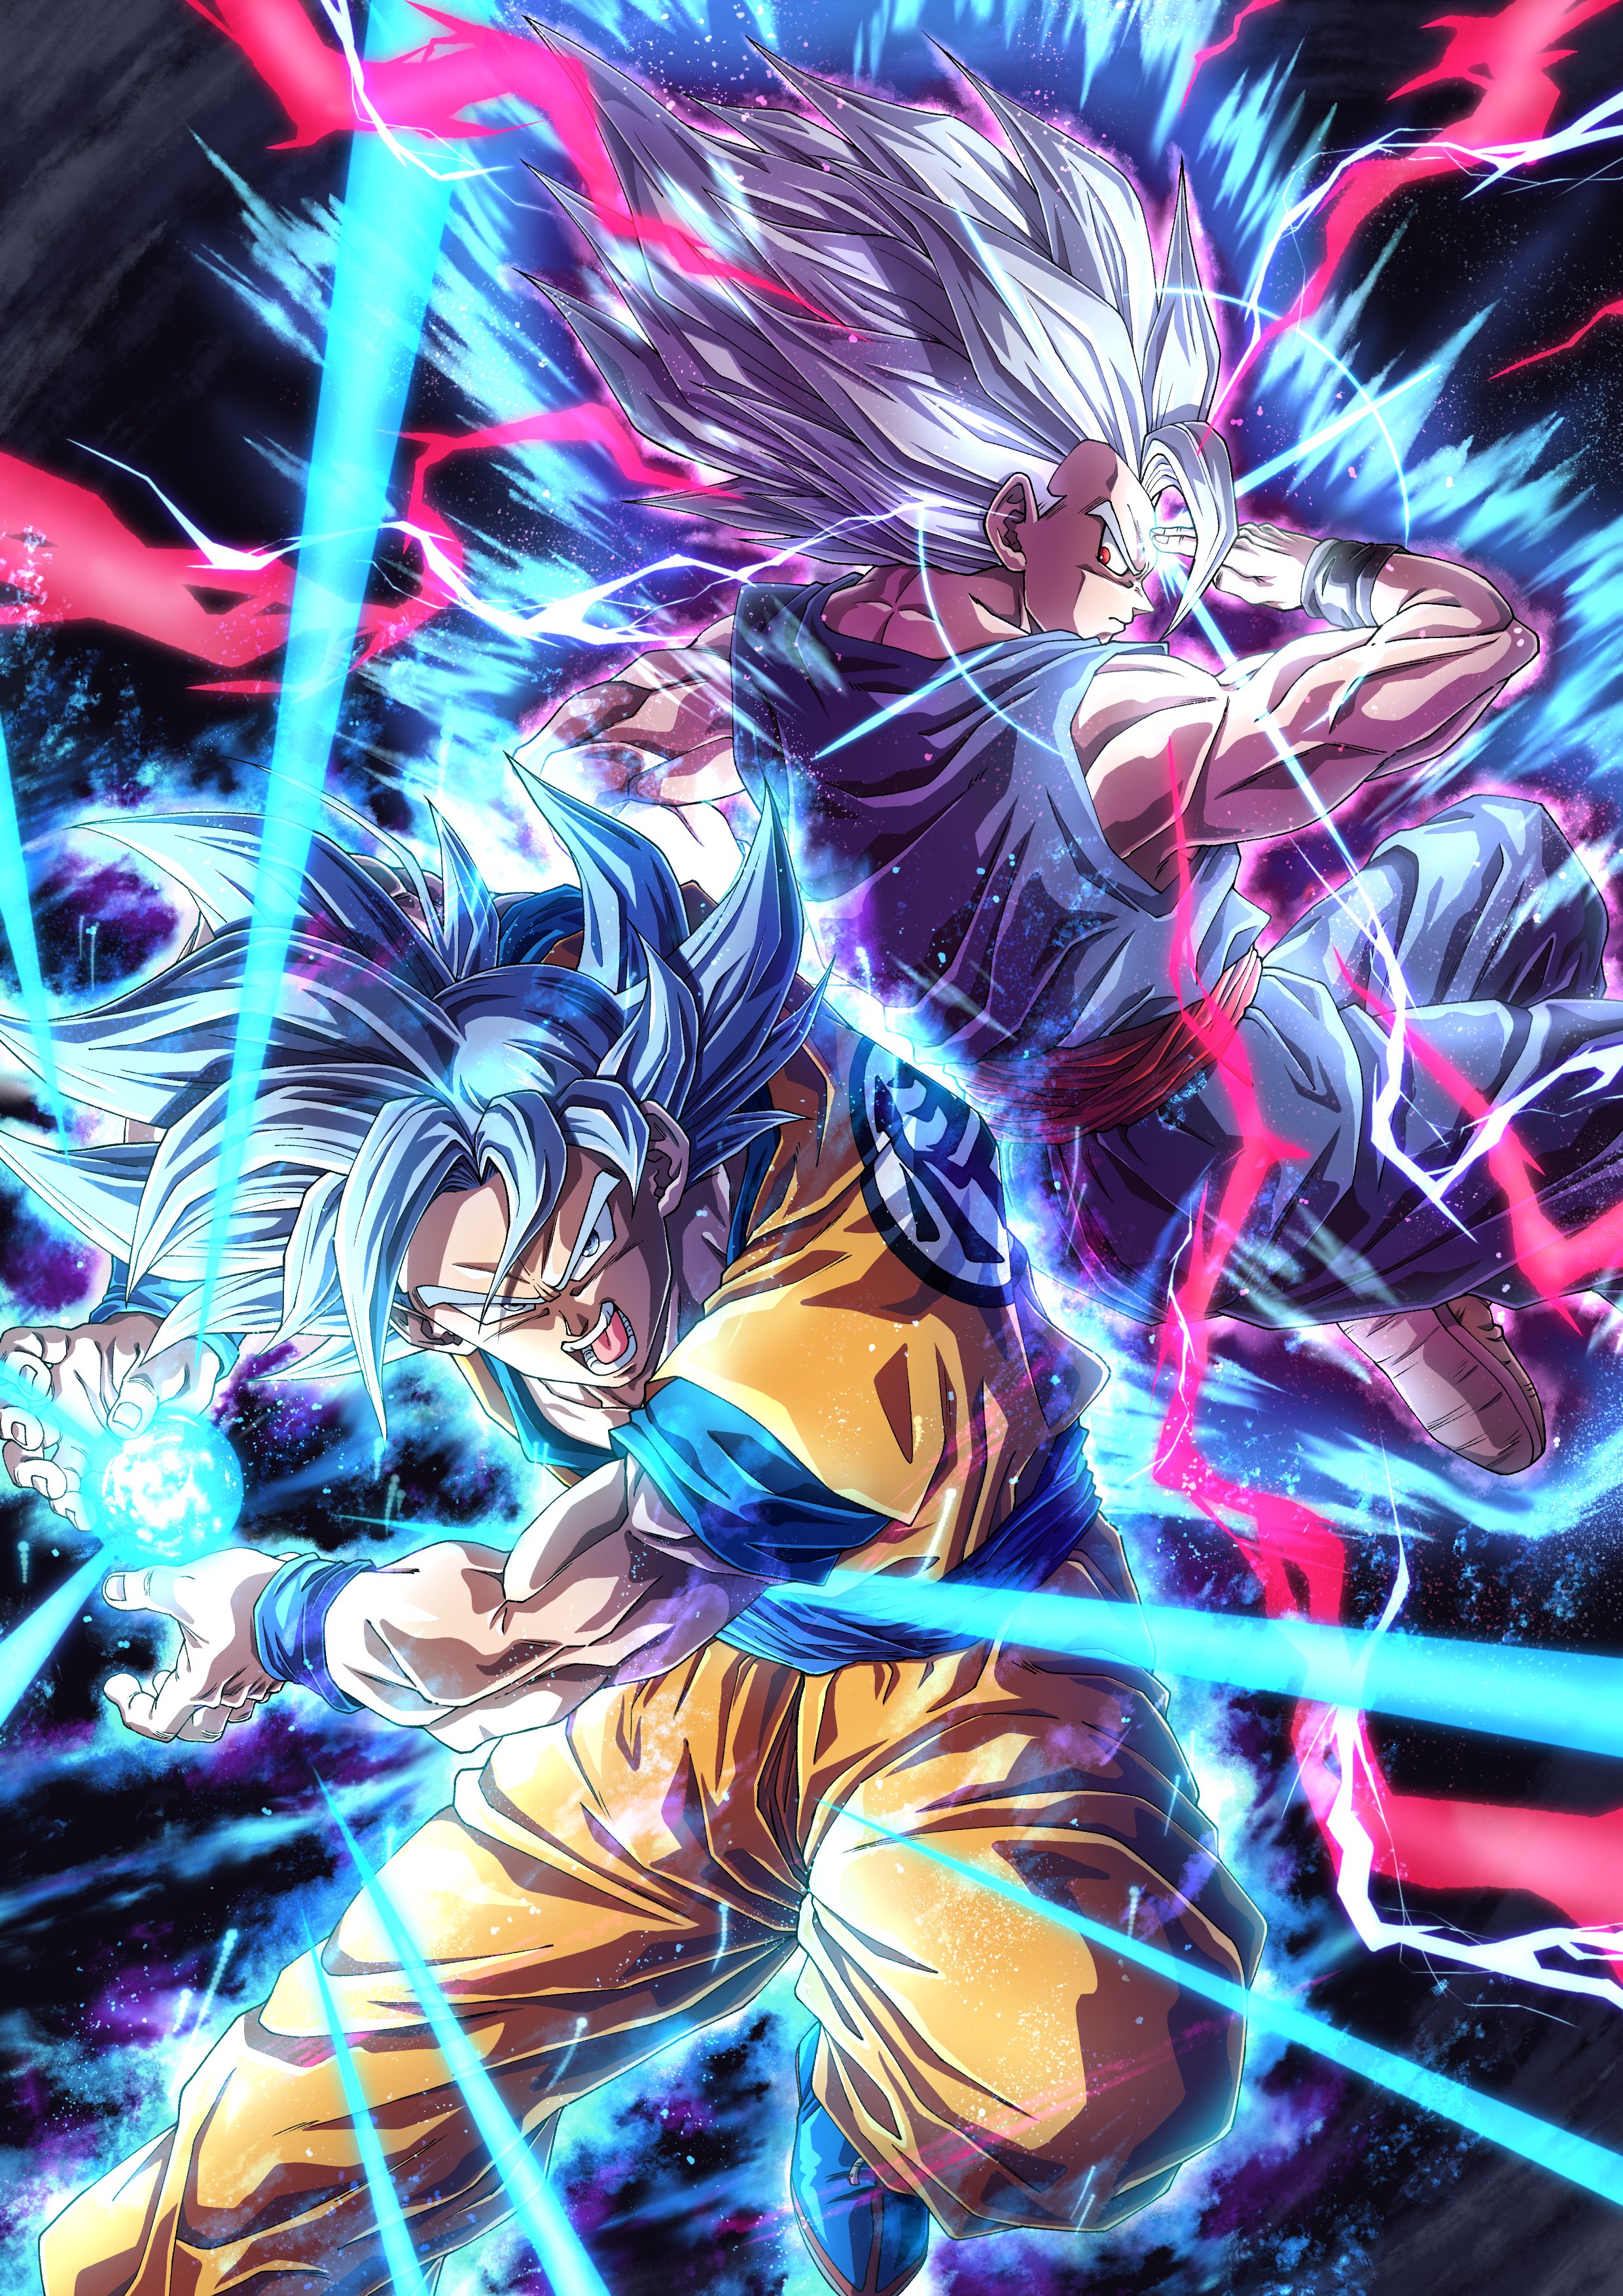 100+] Goku Ultra Instinct Wallpapers | Wallpapers.com